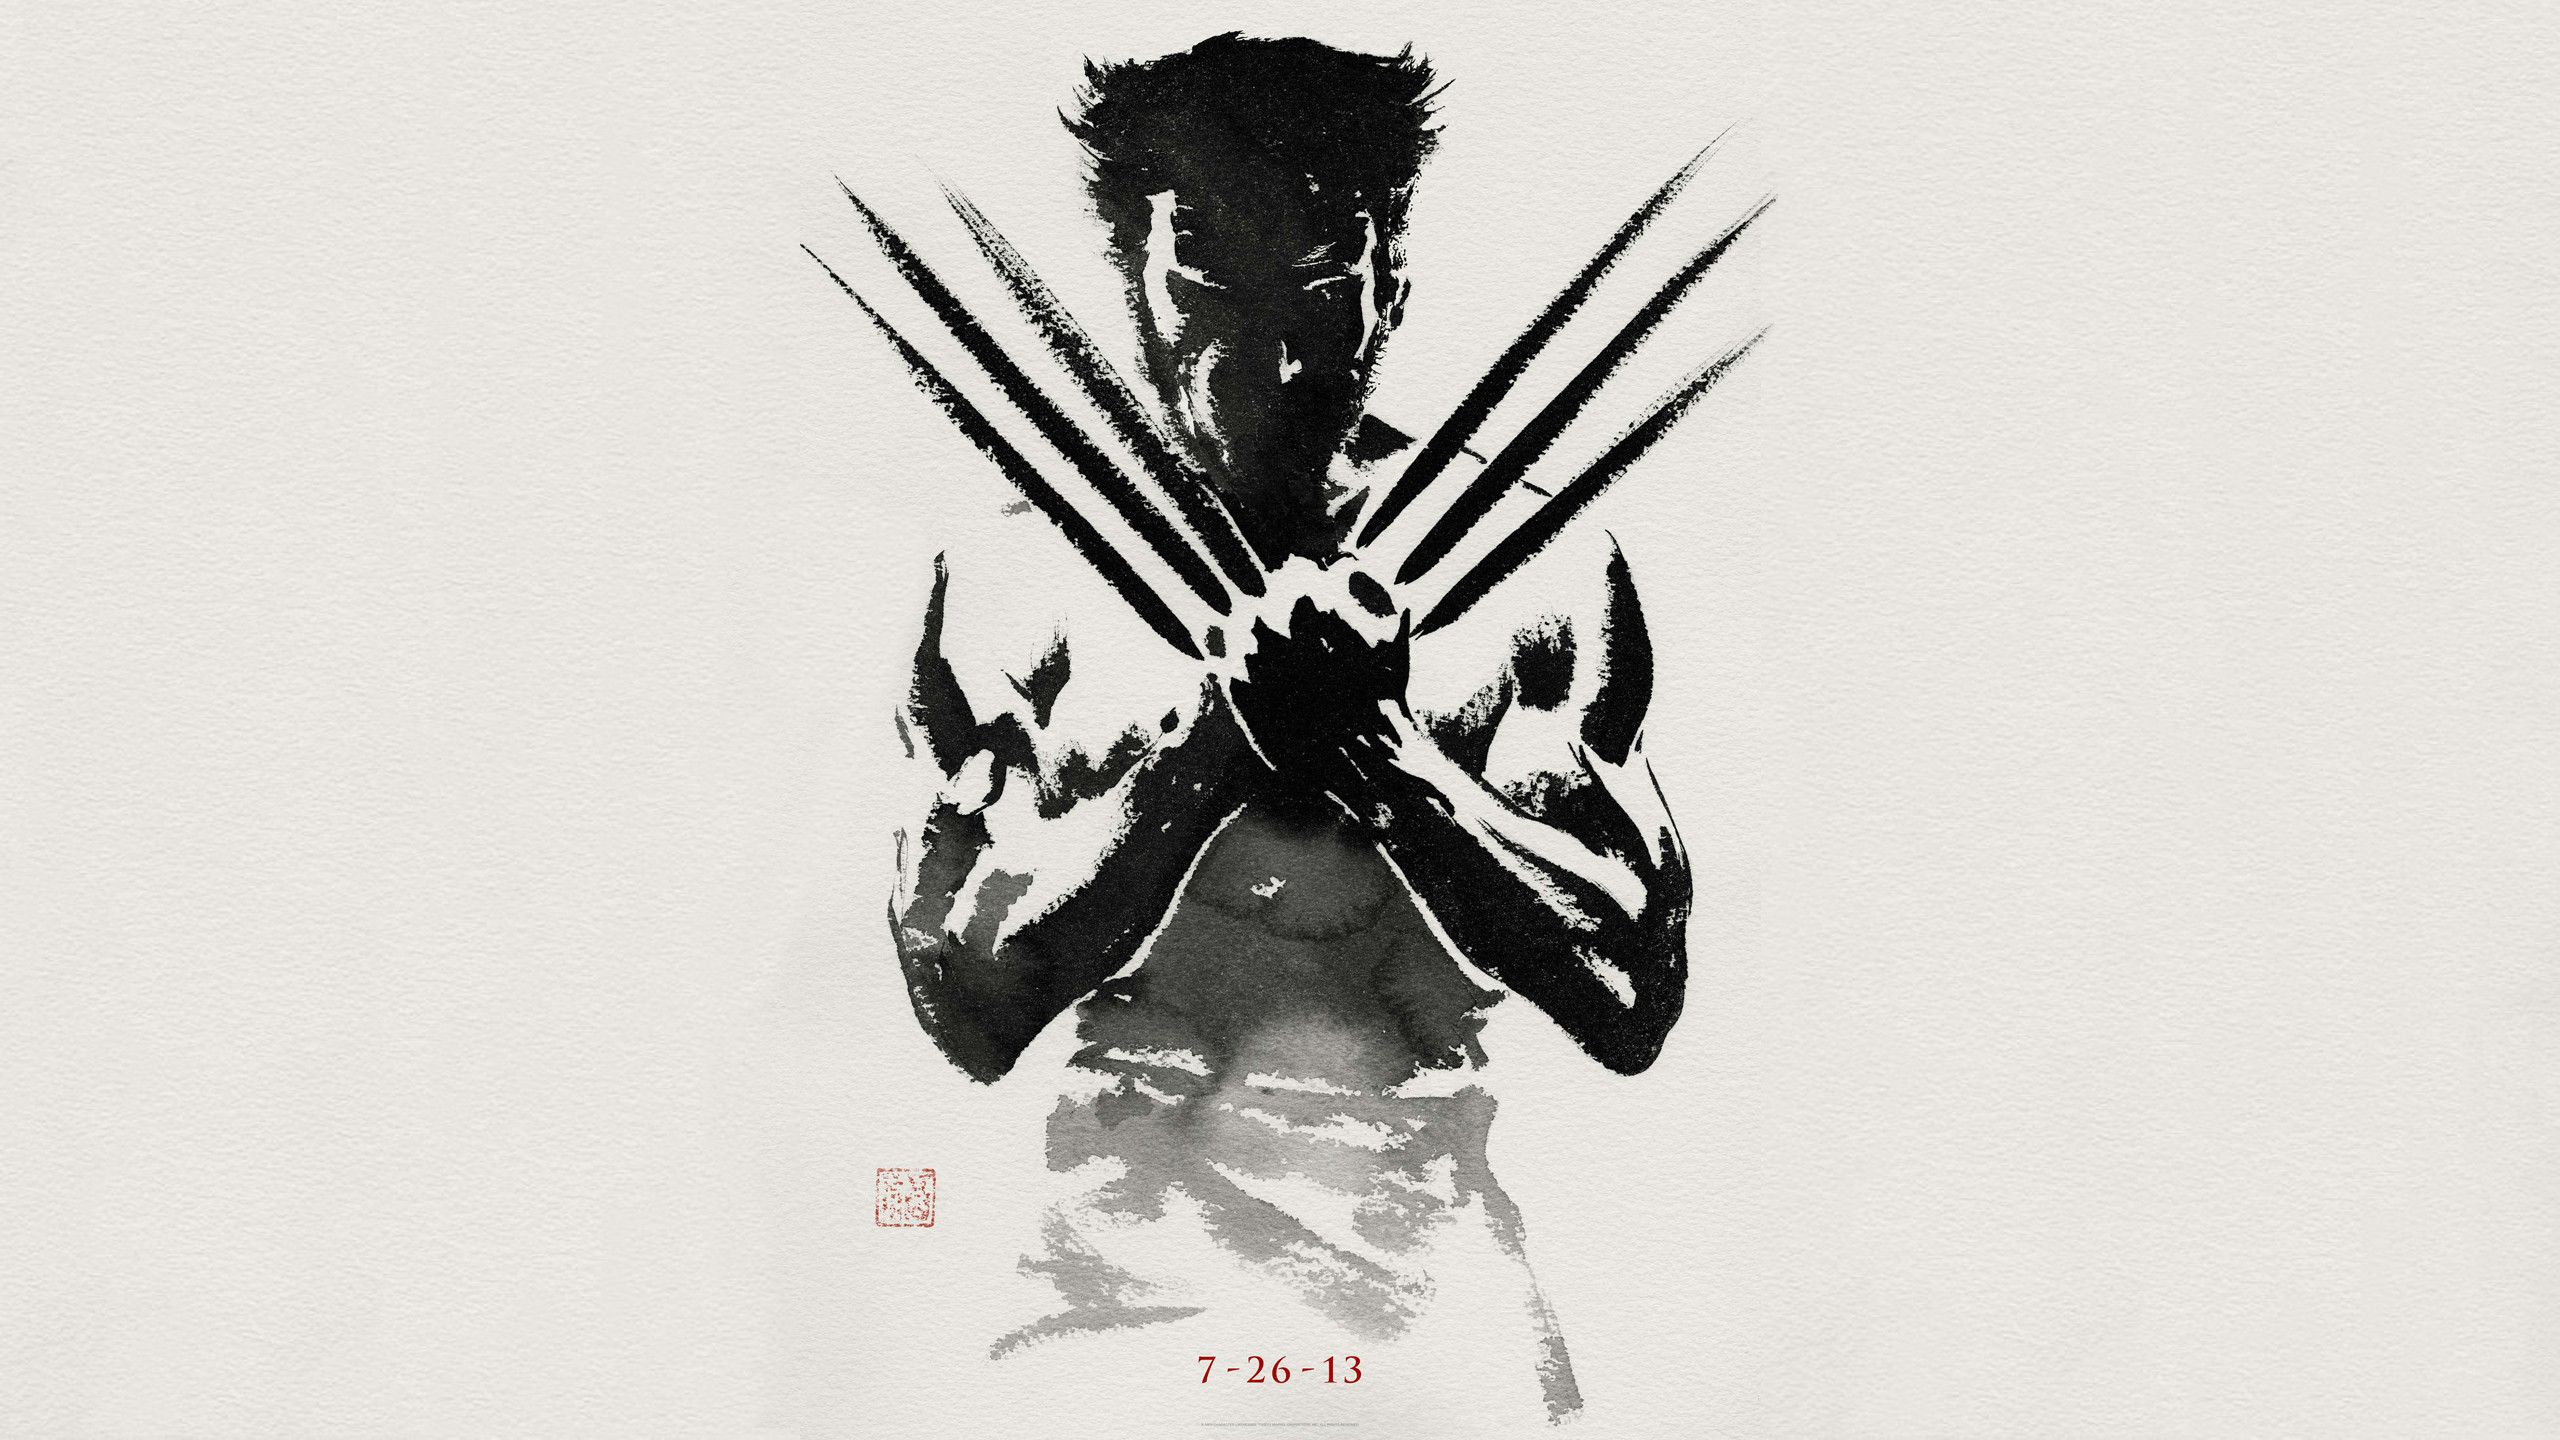  Deadpool & Wolverine Hintergrundbild 2560x1440. Mobile wallpaper: The Wolverine, X Men, Wolverine, Movie, 279557 download the picture for free